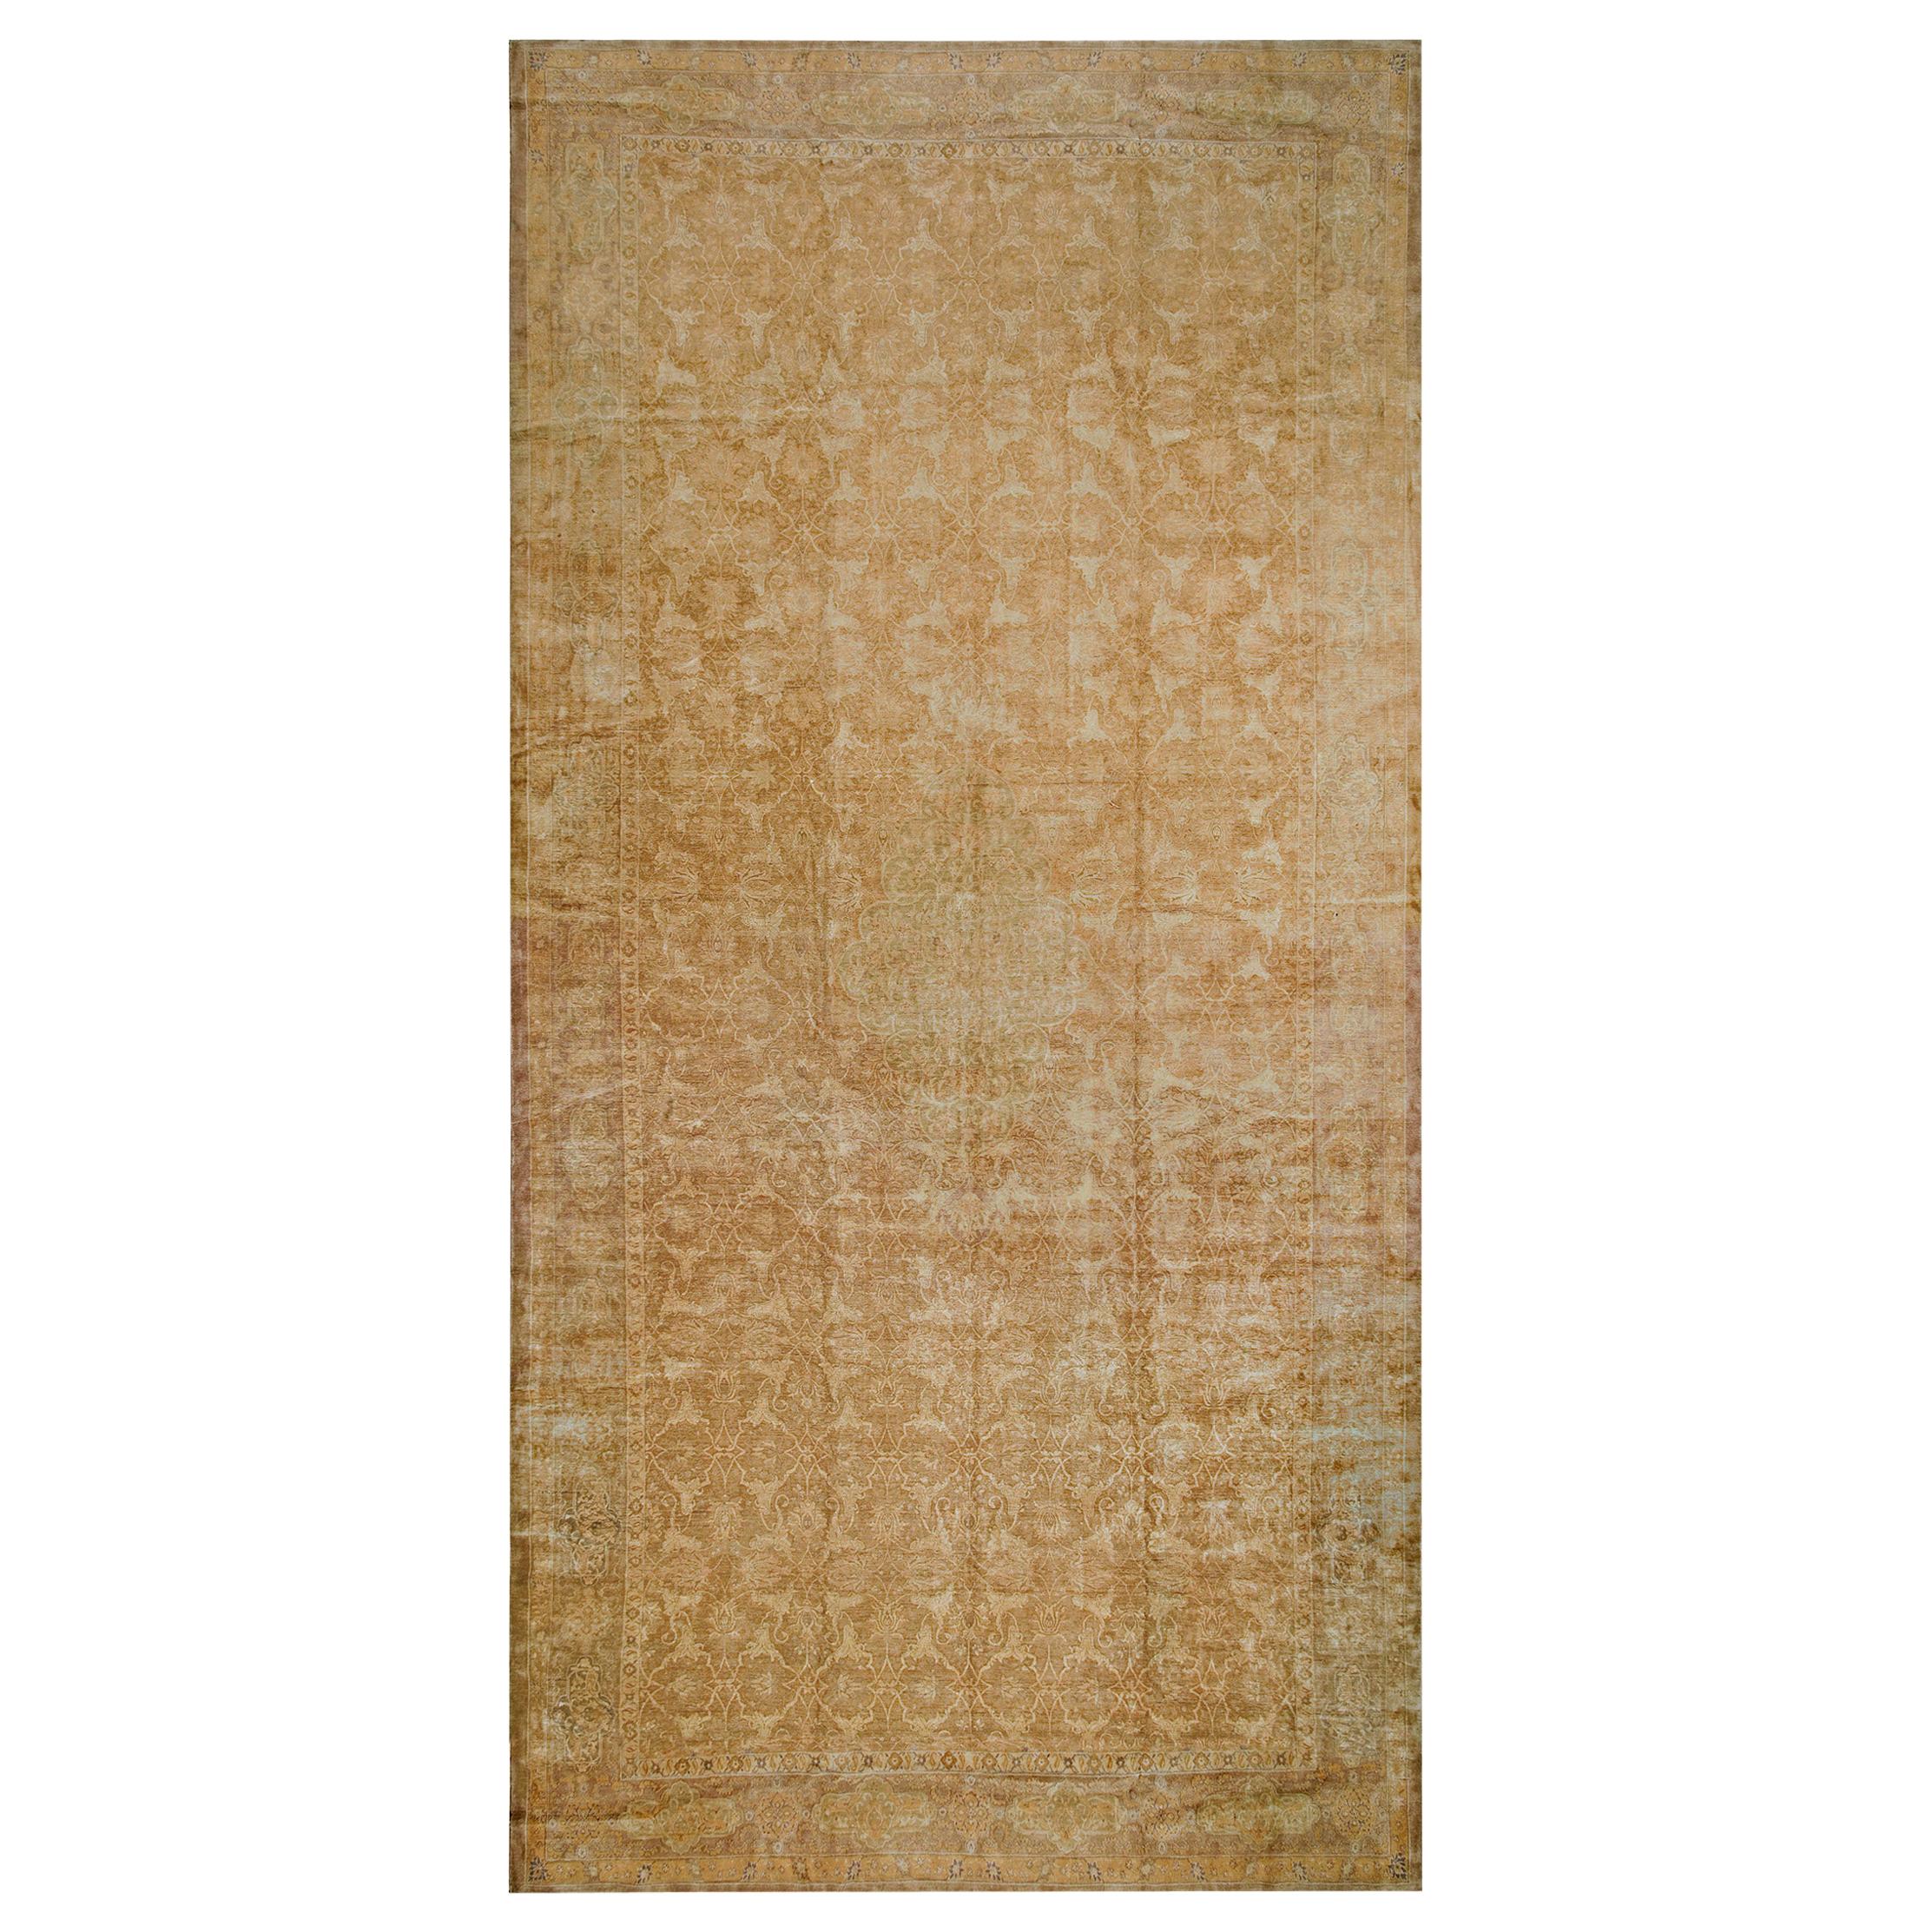 Early 20th Century Turkish Sivas Carpet ( 11' x 22'8" - 335 x 690 ) 